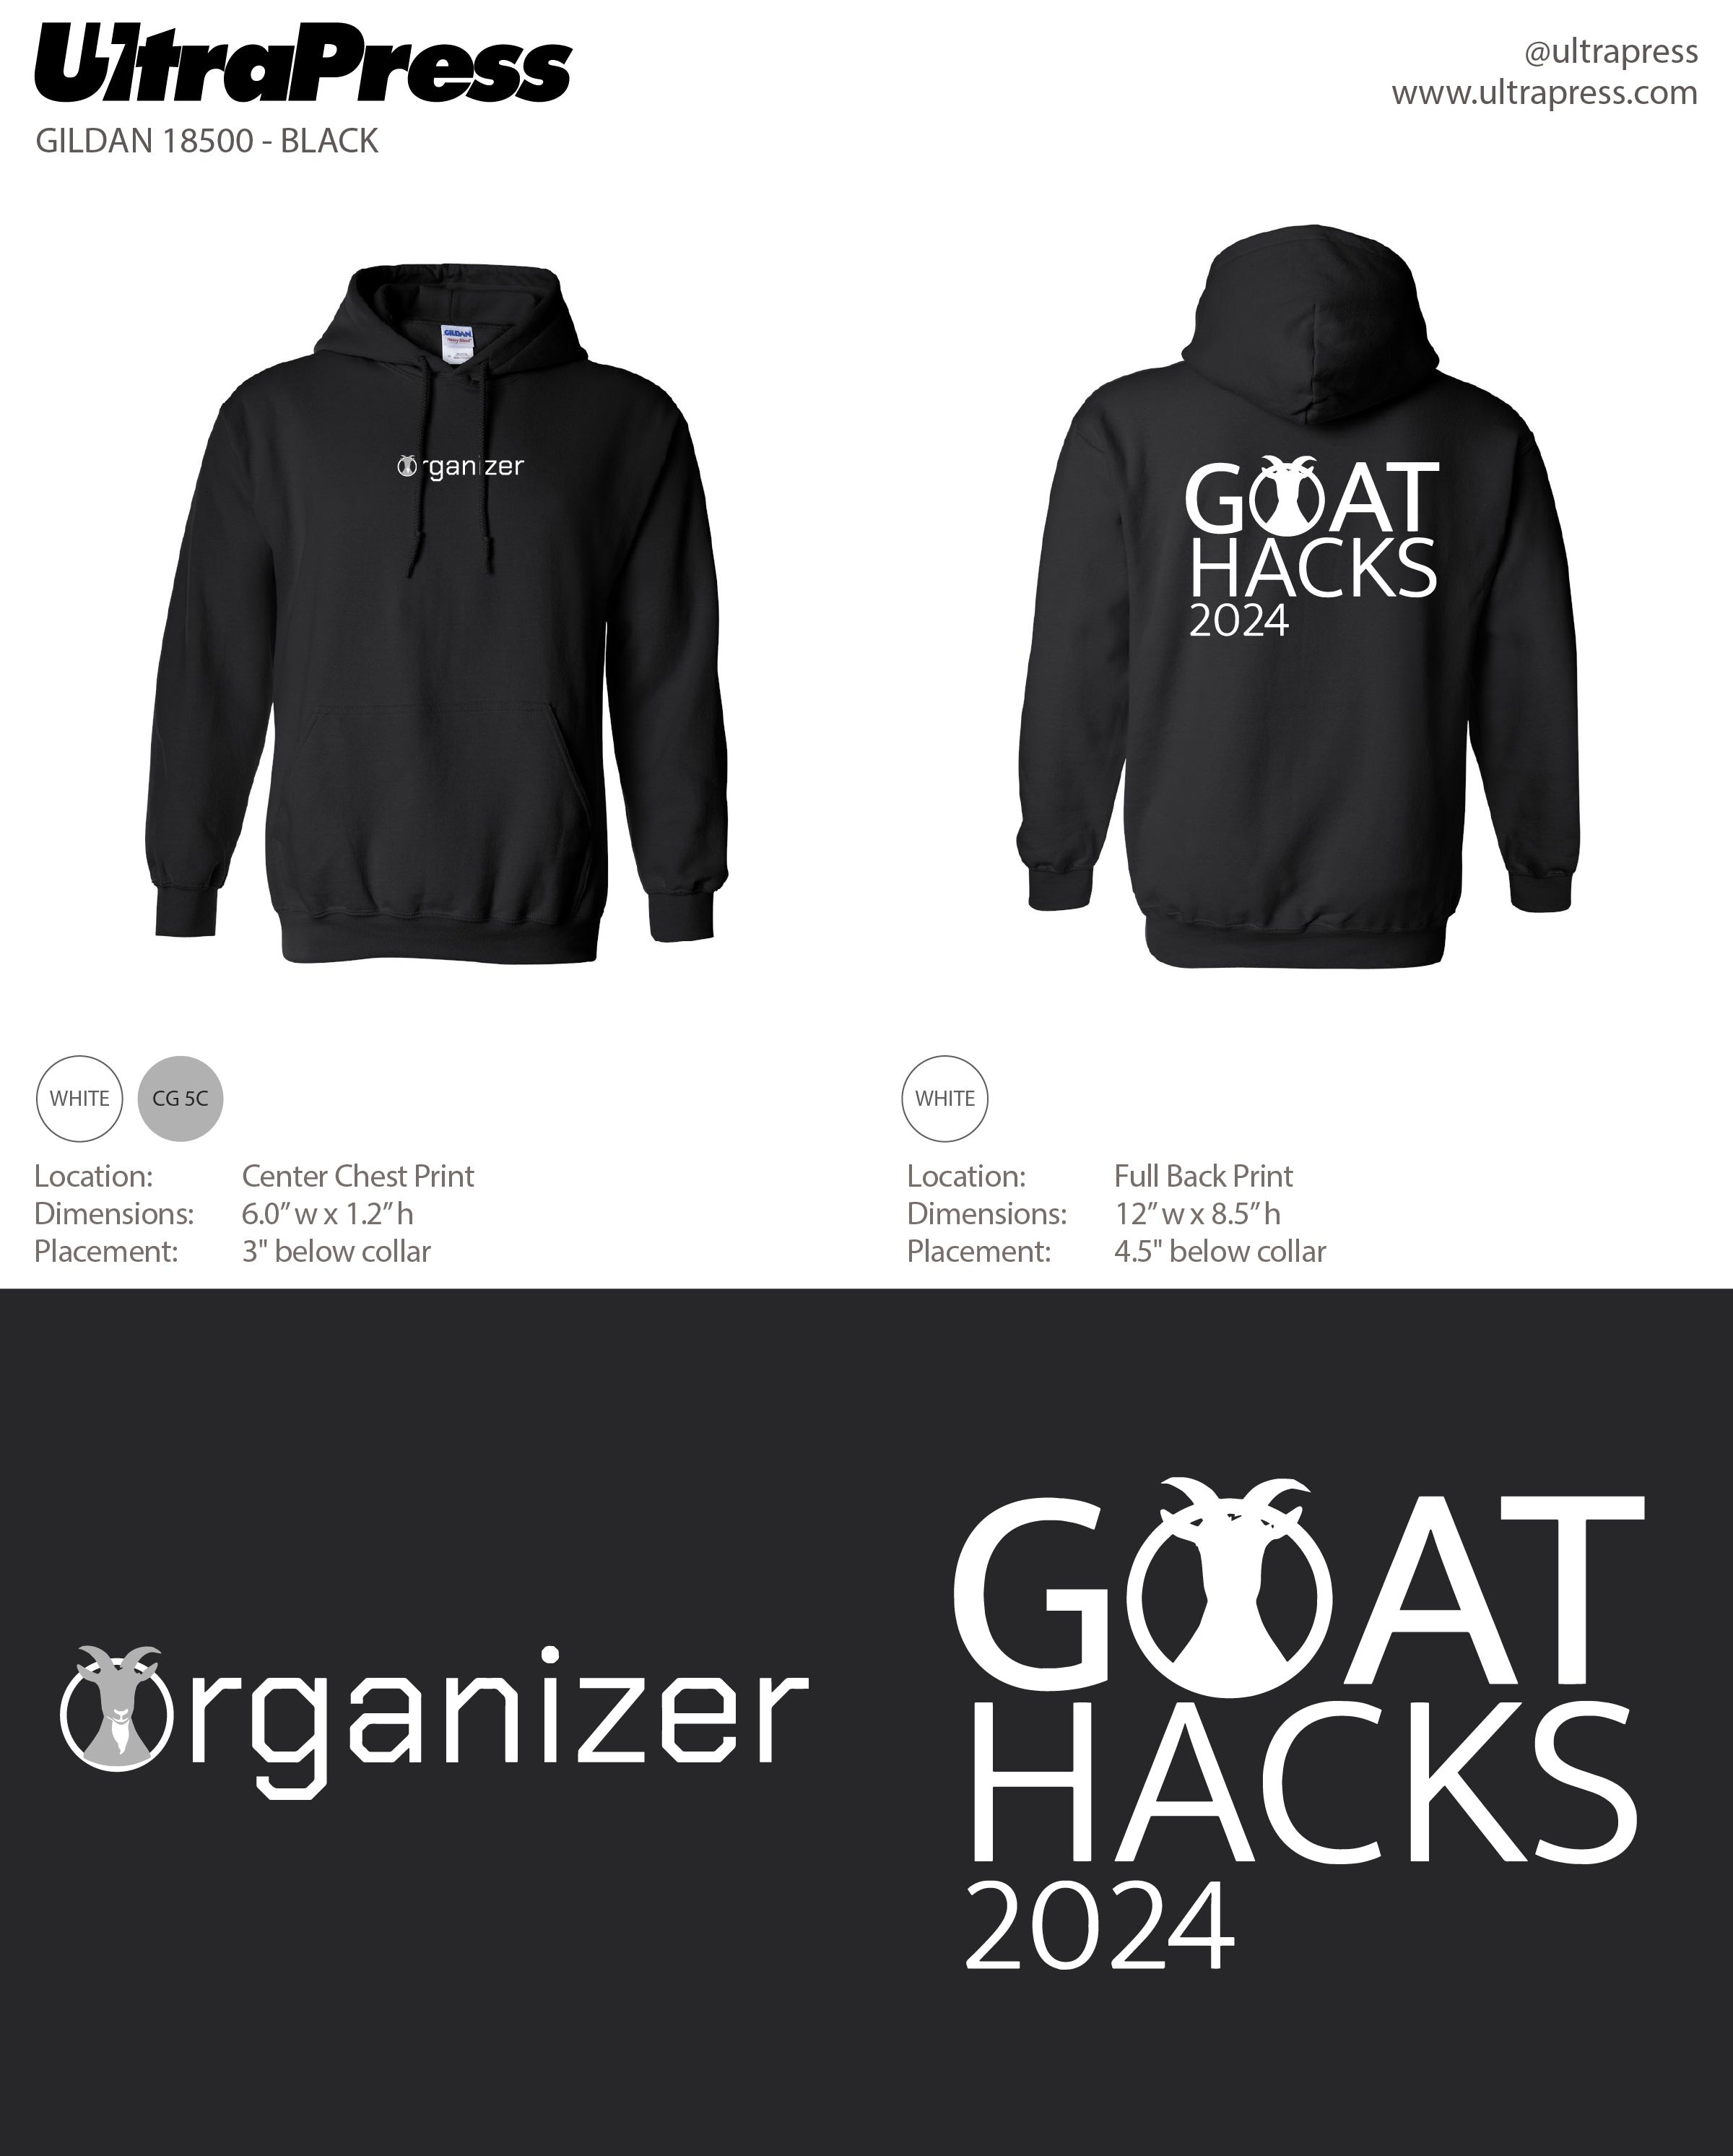 UP-SP-66182 Goat Hacks Organizer 2024 12 Min Qty (Bulk)